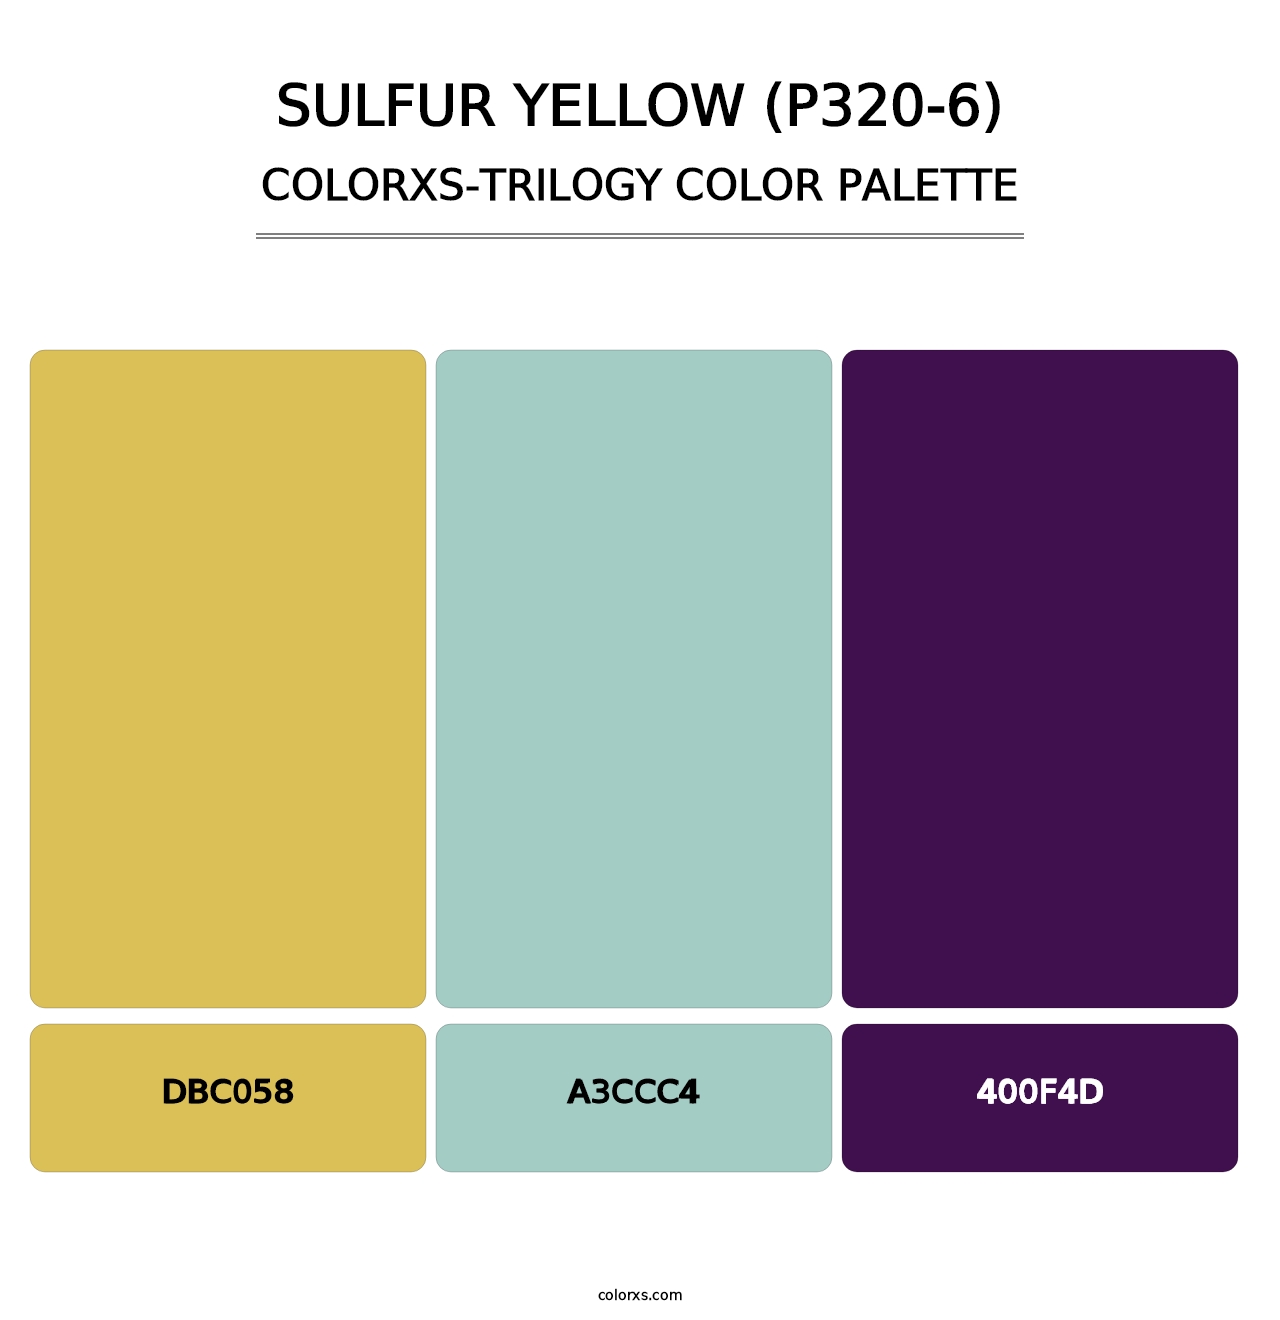 Sulfur Yellow (P320-6) - Colorxs Trilogy Palette